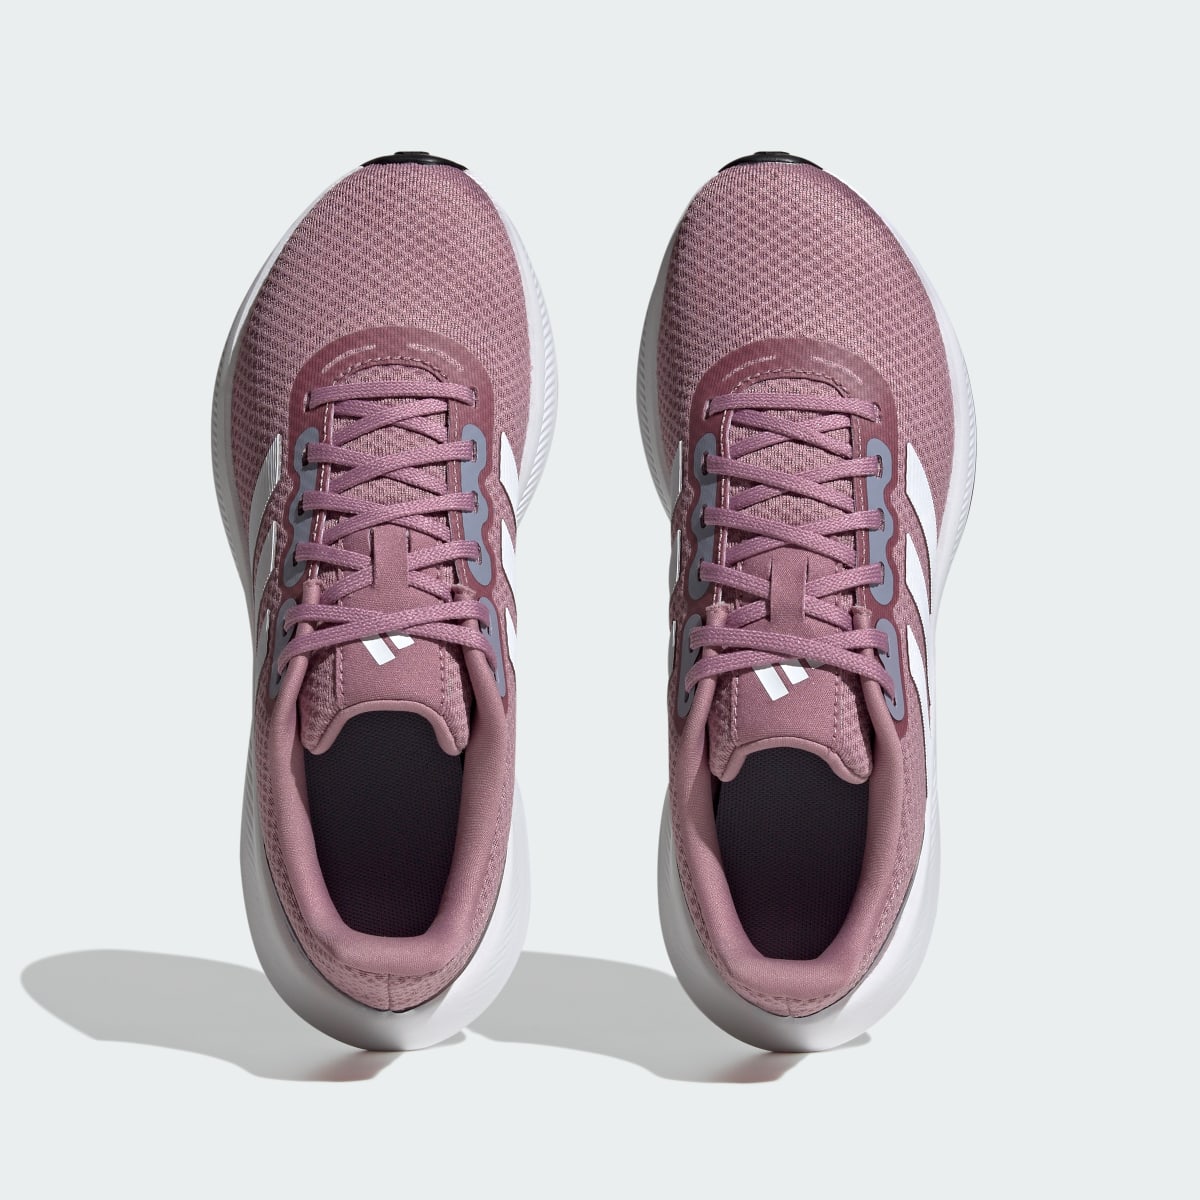 Adidas Runfalcon 3 Running Shoes. 5